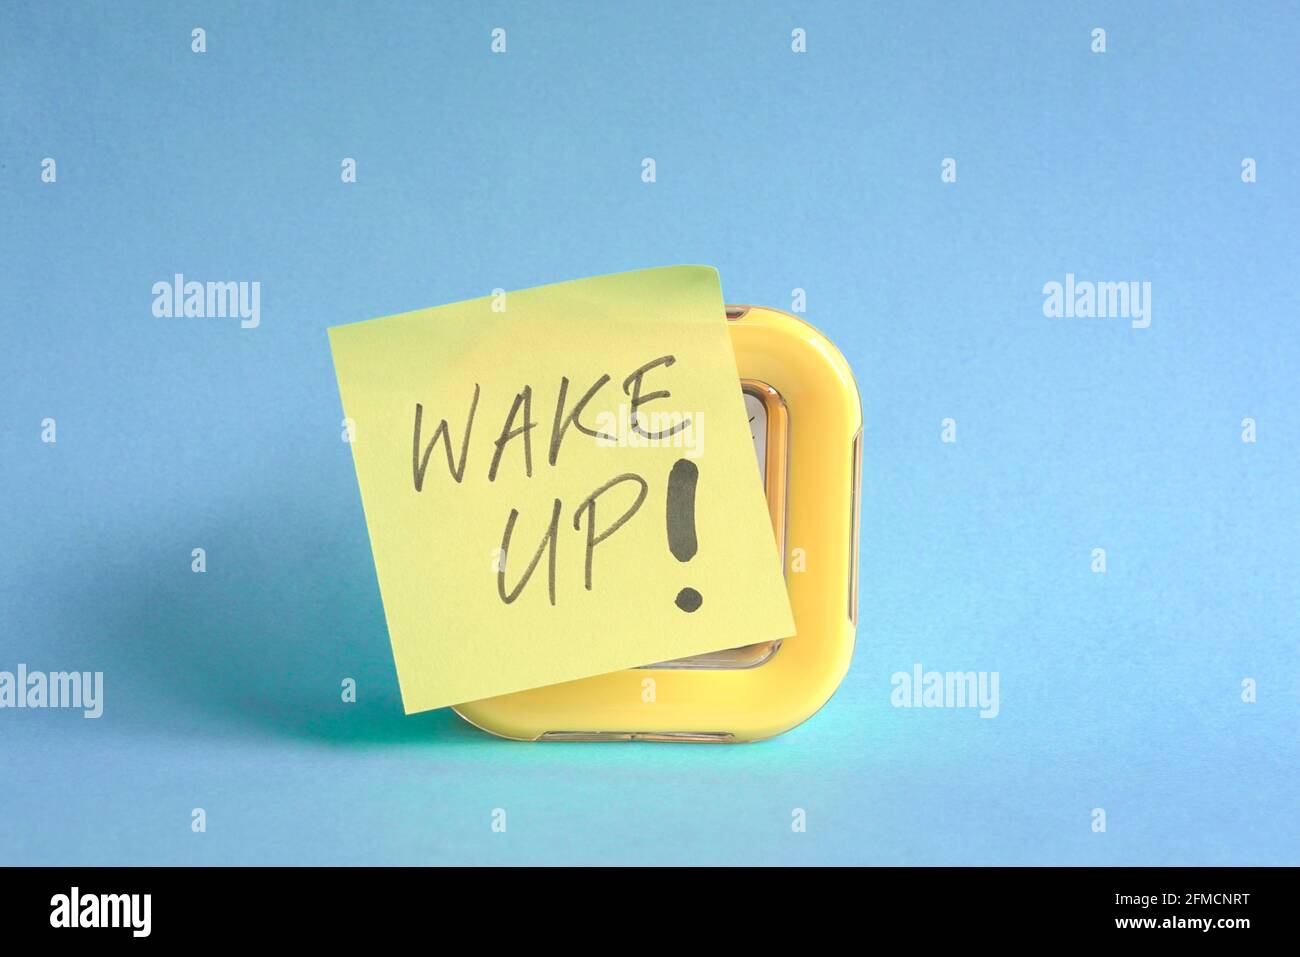 Wake up message written on marker pen stick on yellow clock. On blue background. Stock Photo